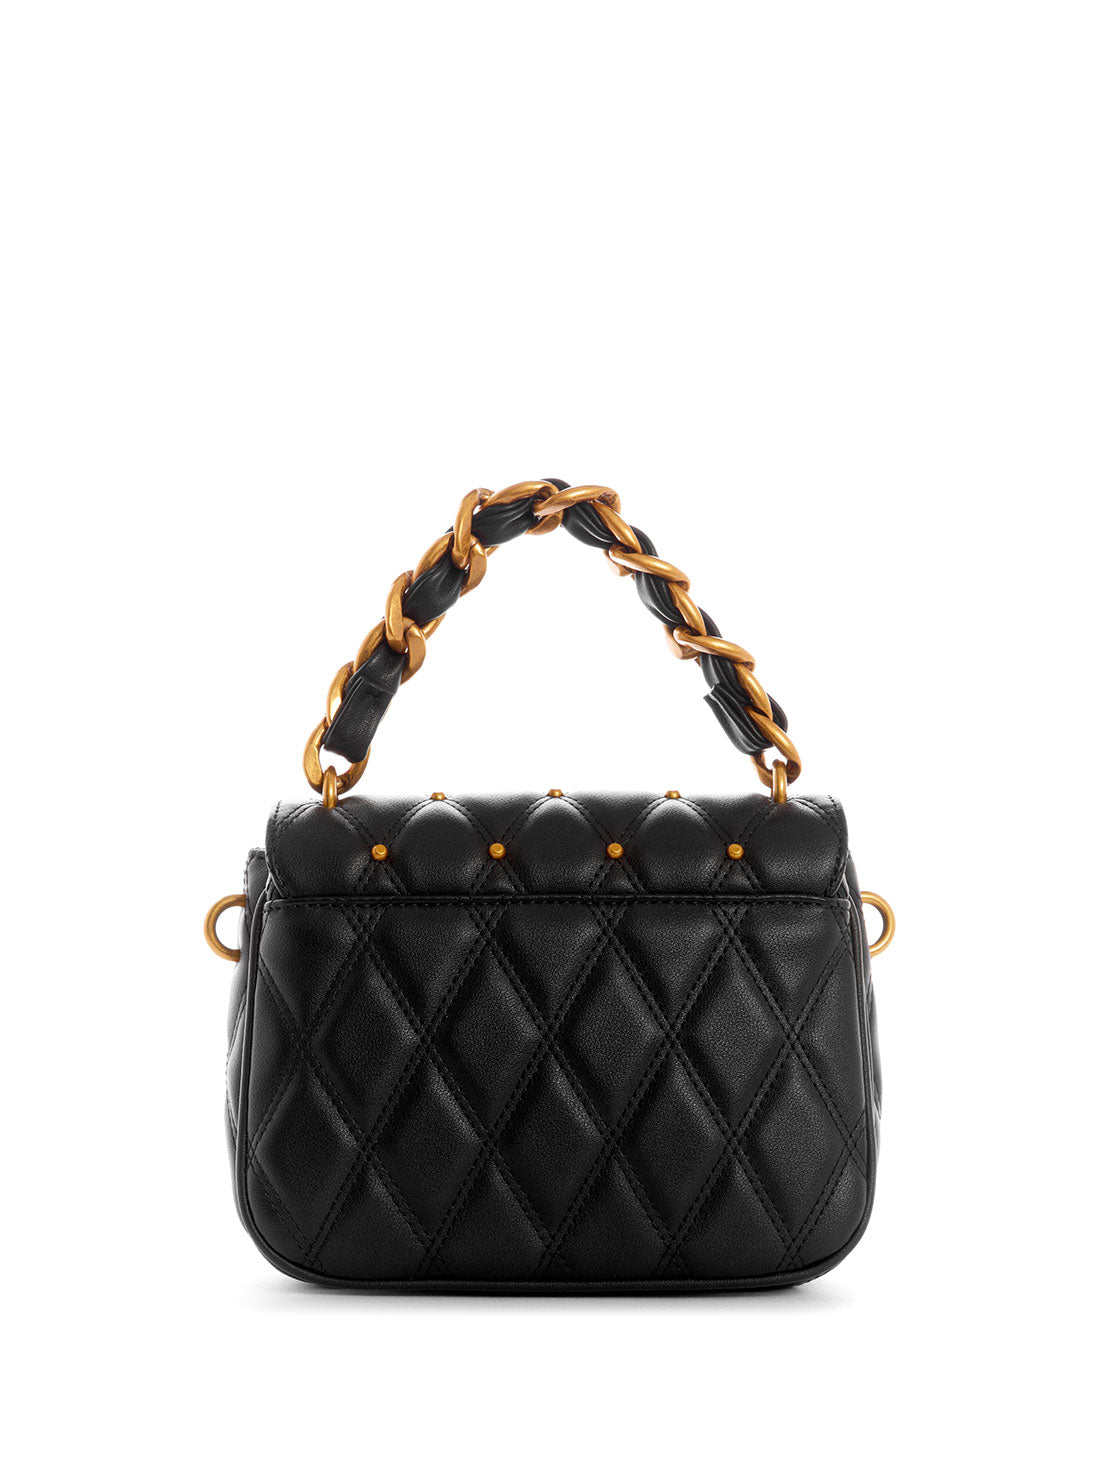 GUESS Womens Black Triana Studded Shoulder Bag QS855319 Back View